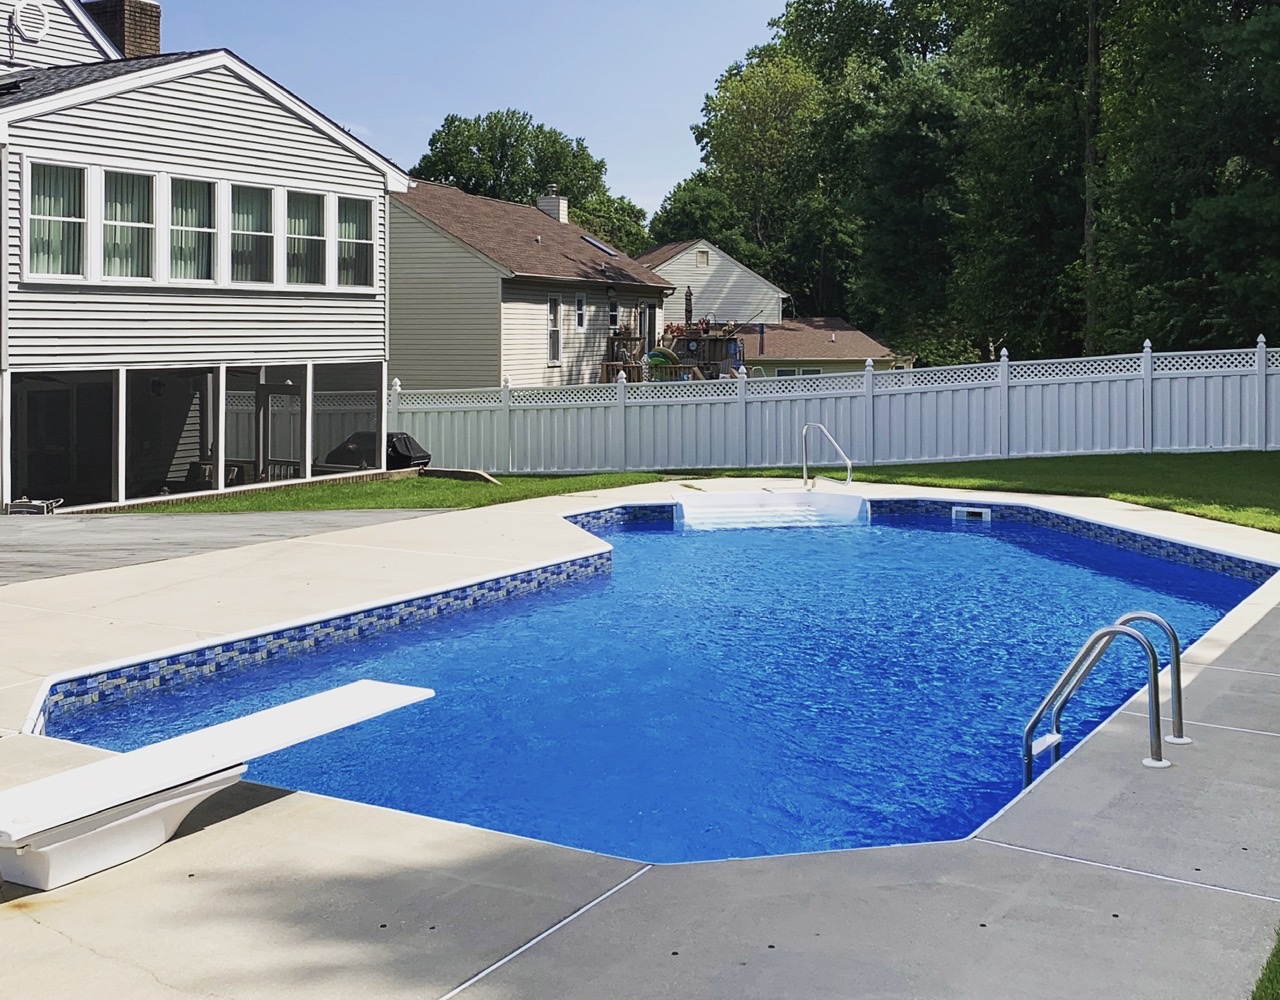 Pool Cleaning & Maintenance in Delaware & Southeastern PA